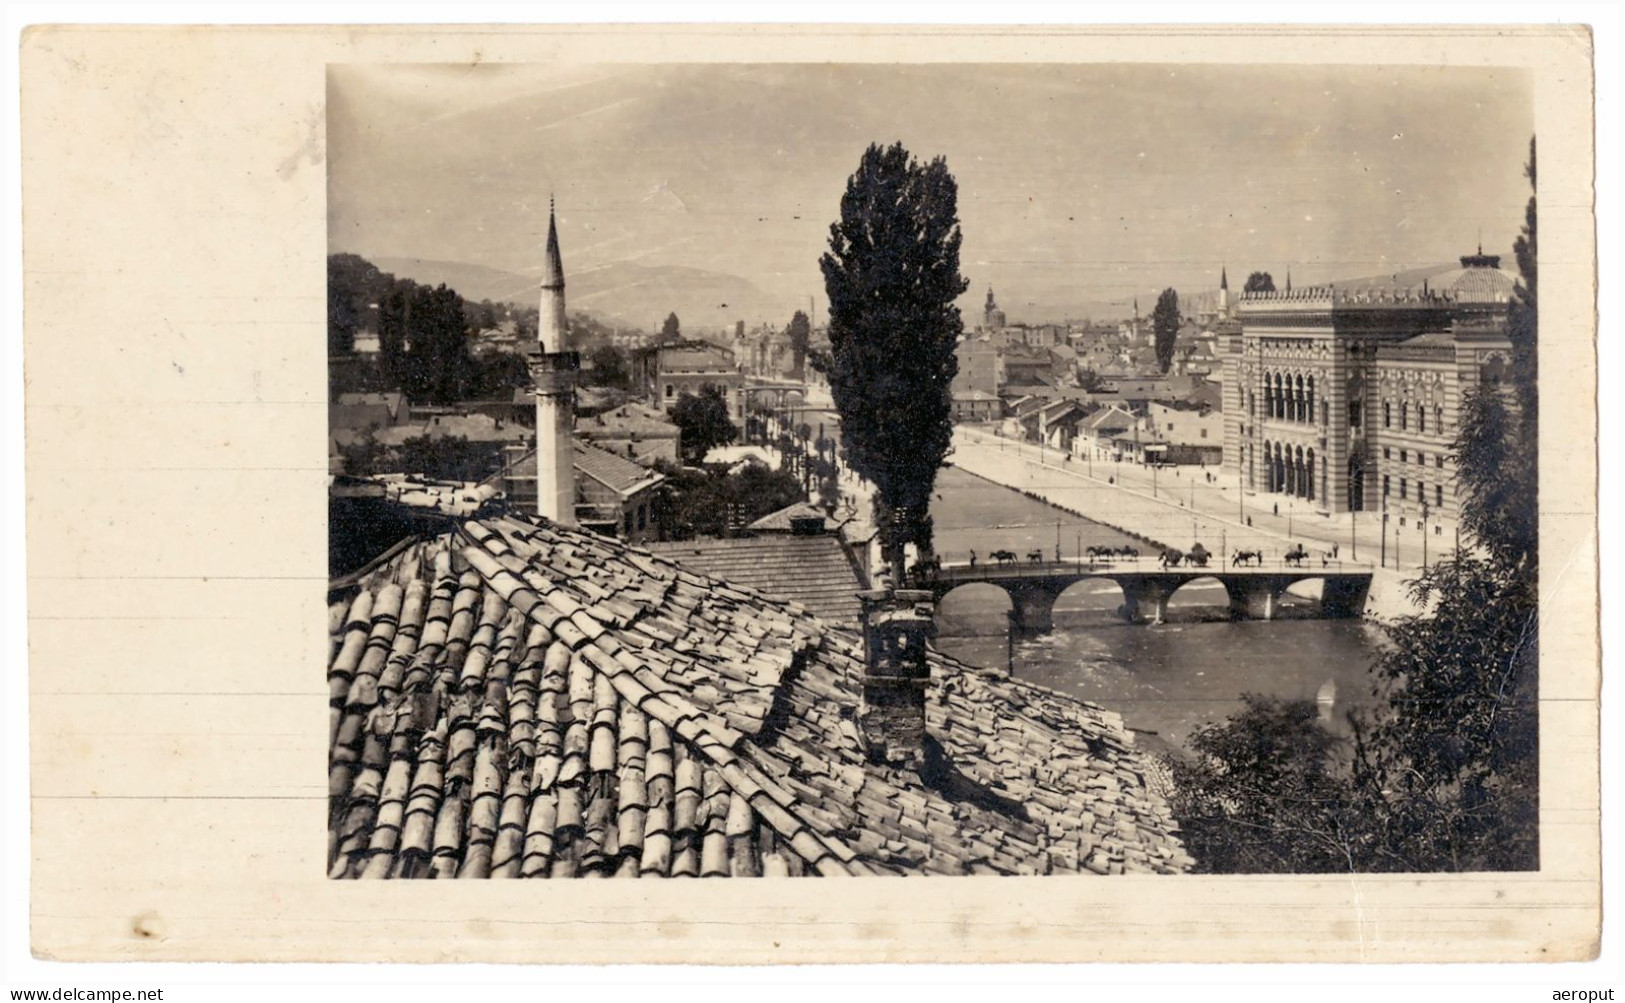 1949 Sarajevo / Bosnia / Postage Due, Stampless 'T' Postcard - Na Teret Primaoca - Real Photo (RPPC) - Bosnia And Herzegovina